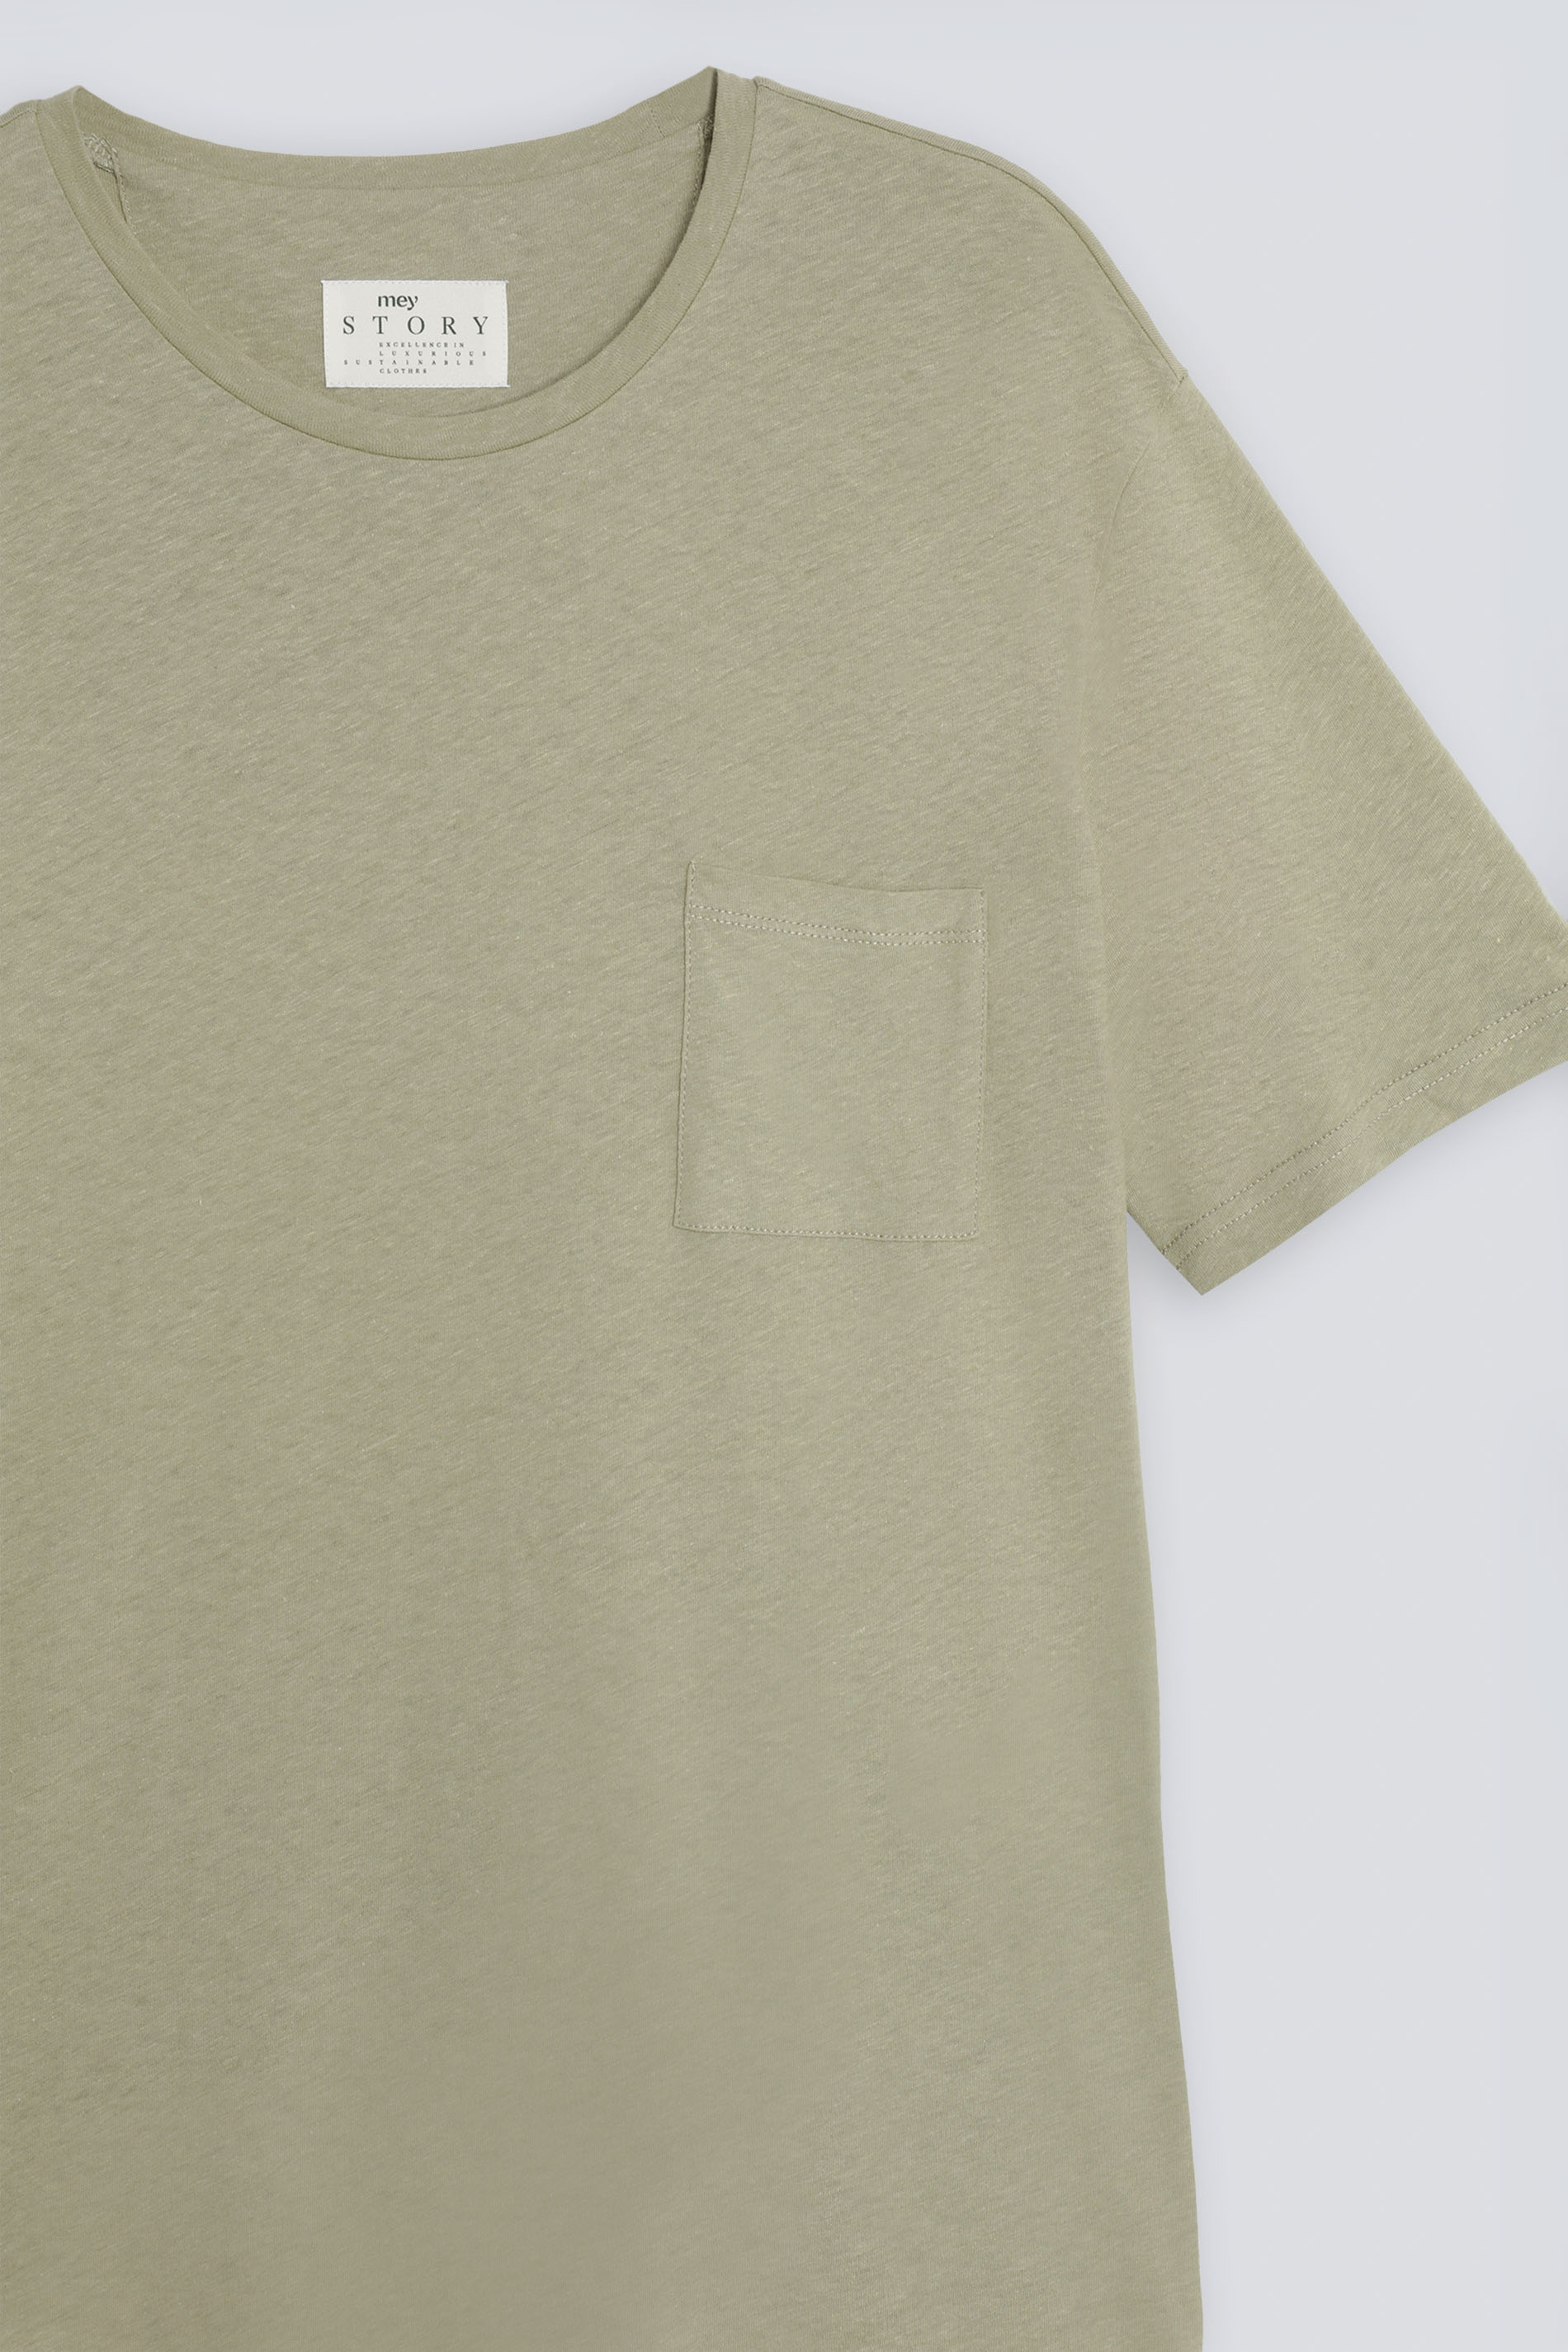 Crew-neck shirt Serie Lino Detail View 01 | mey®